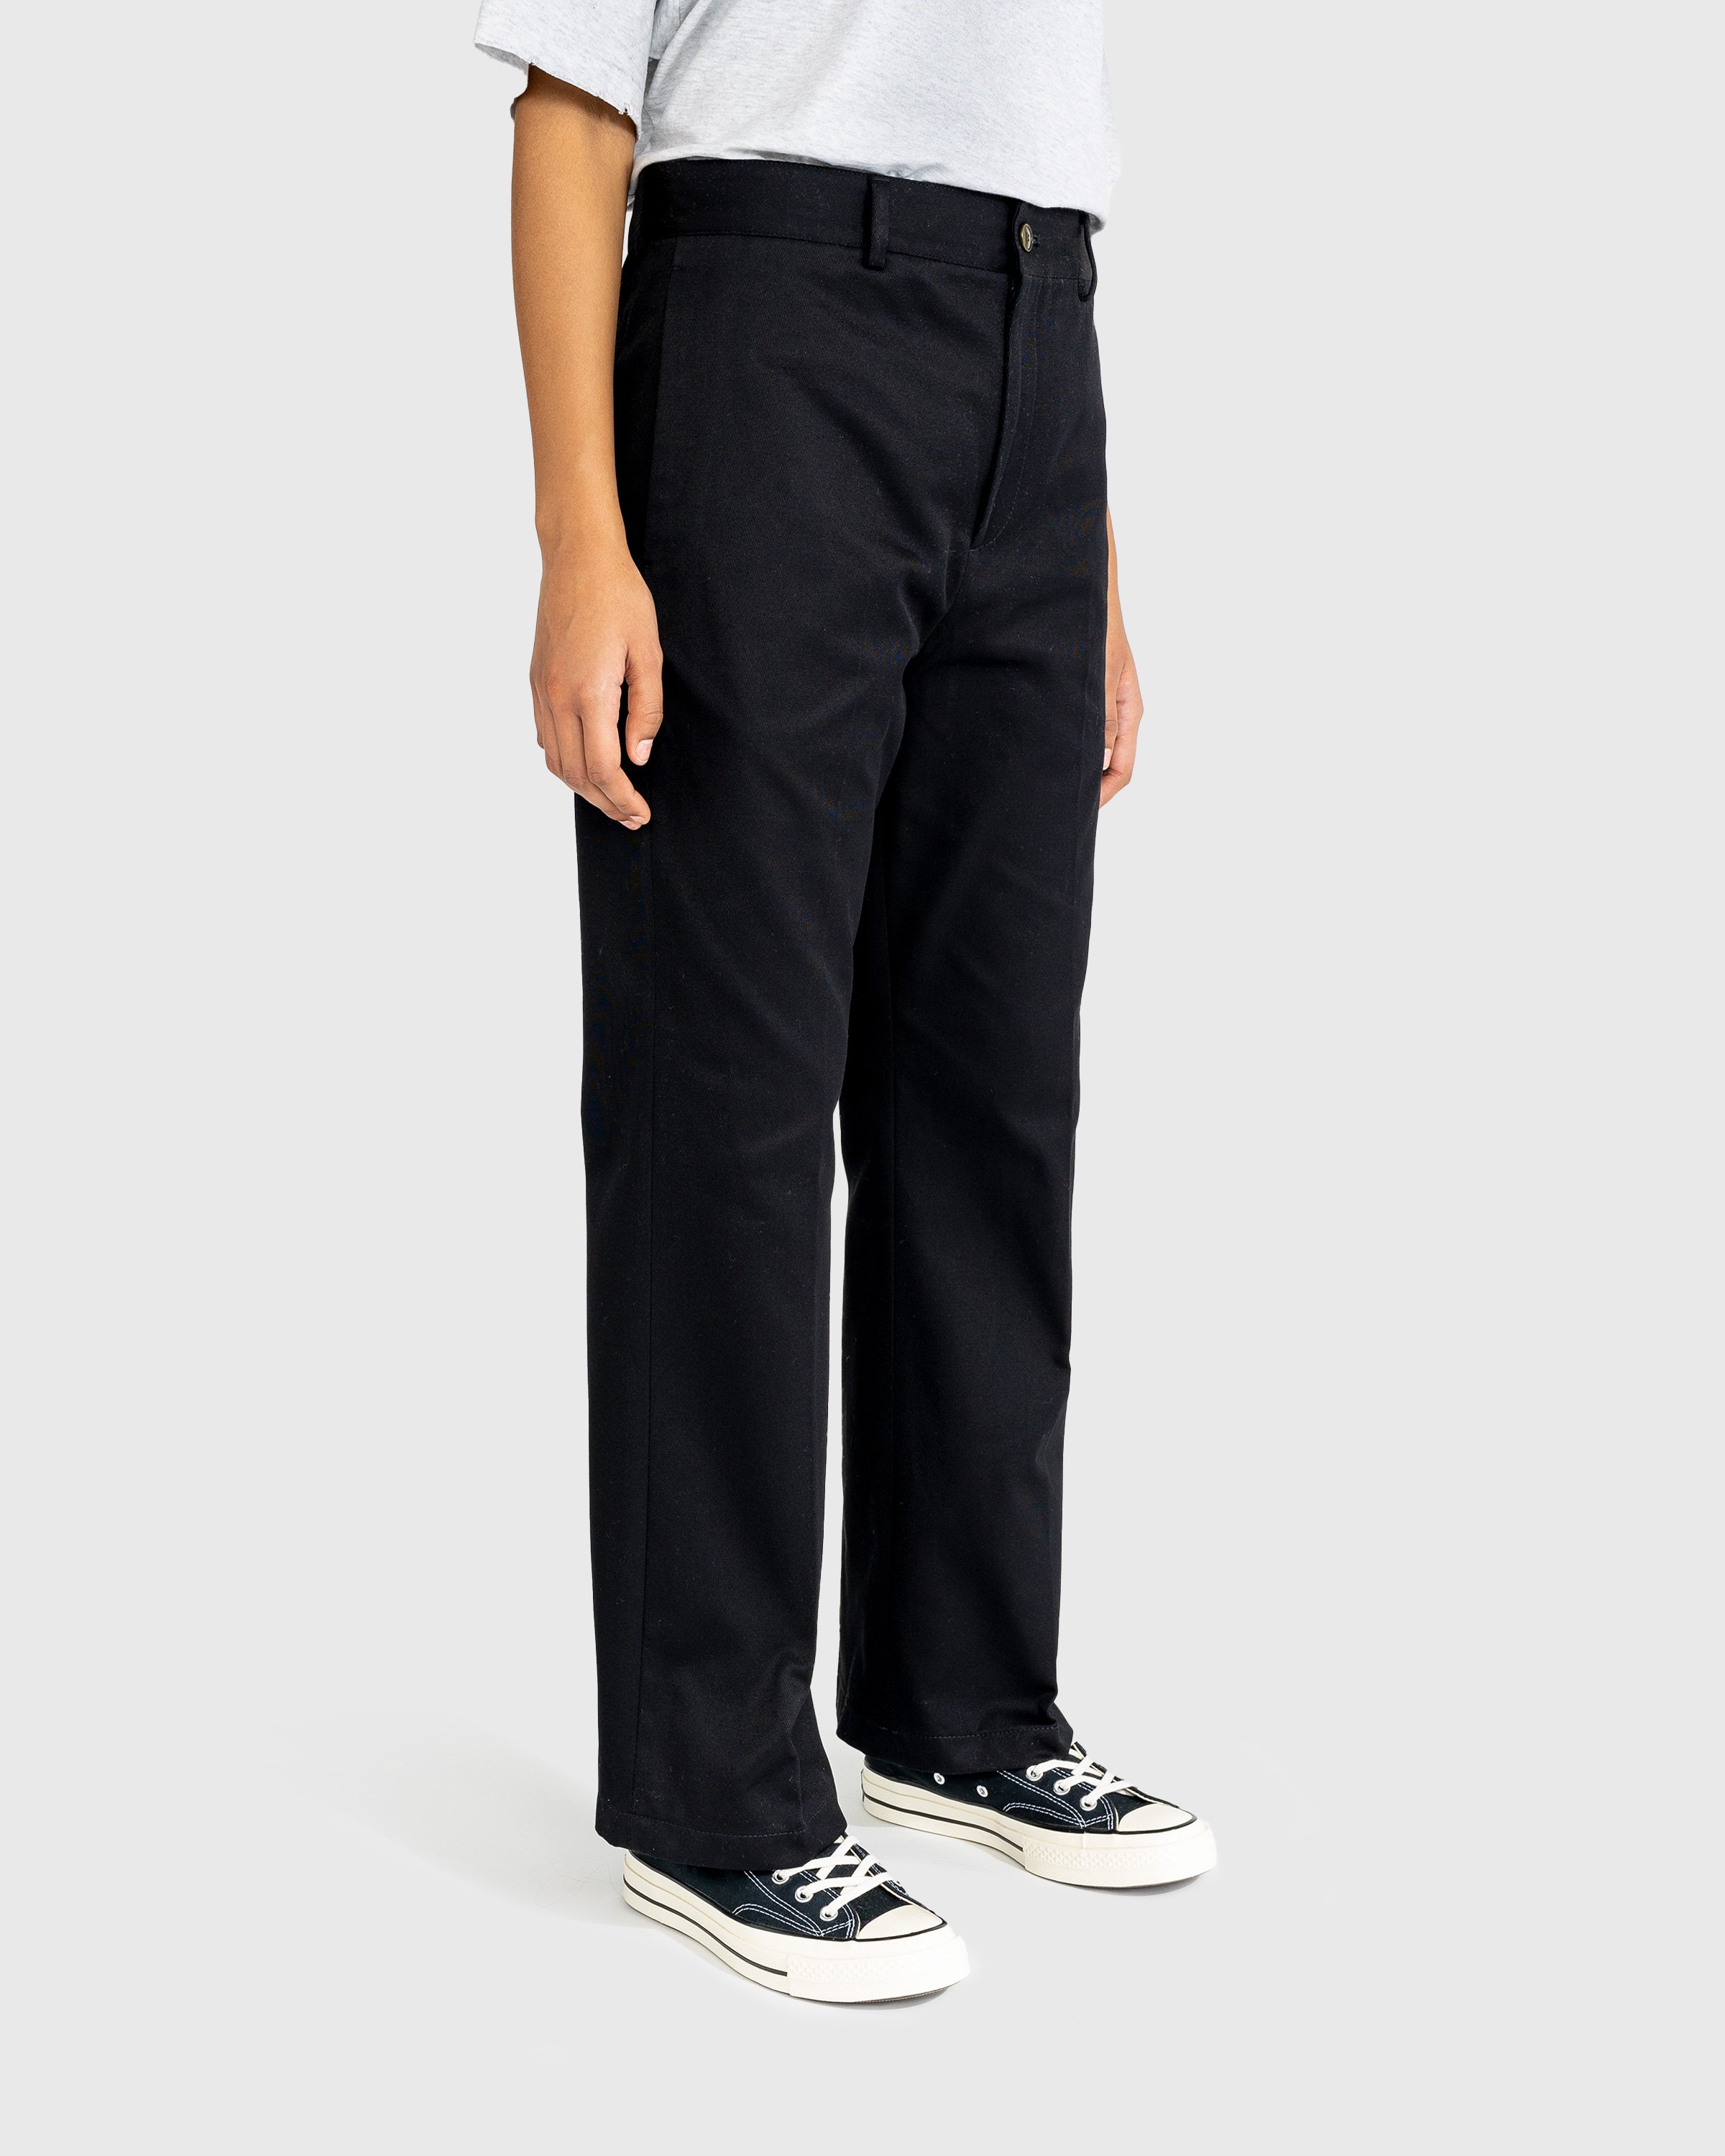 Acne Studios - Twill Trousers Black 1 - Clothing - Black - Image 3